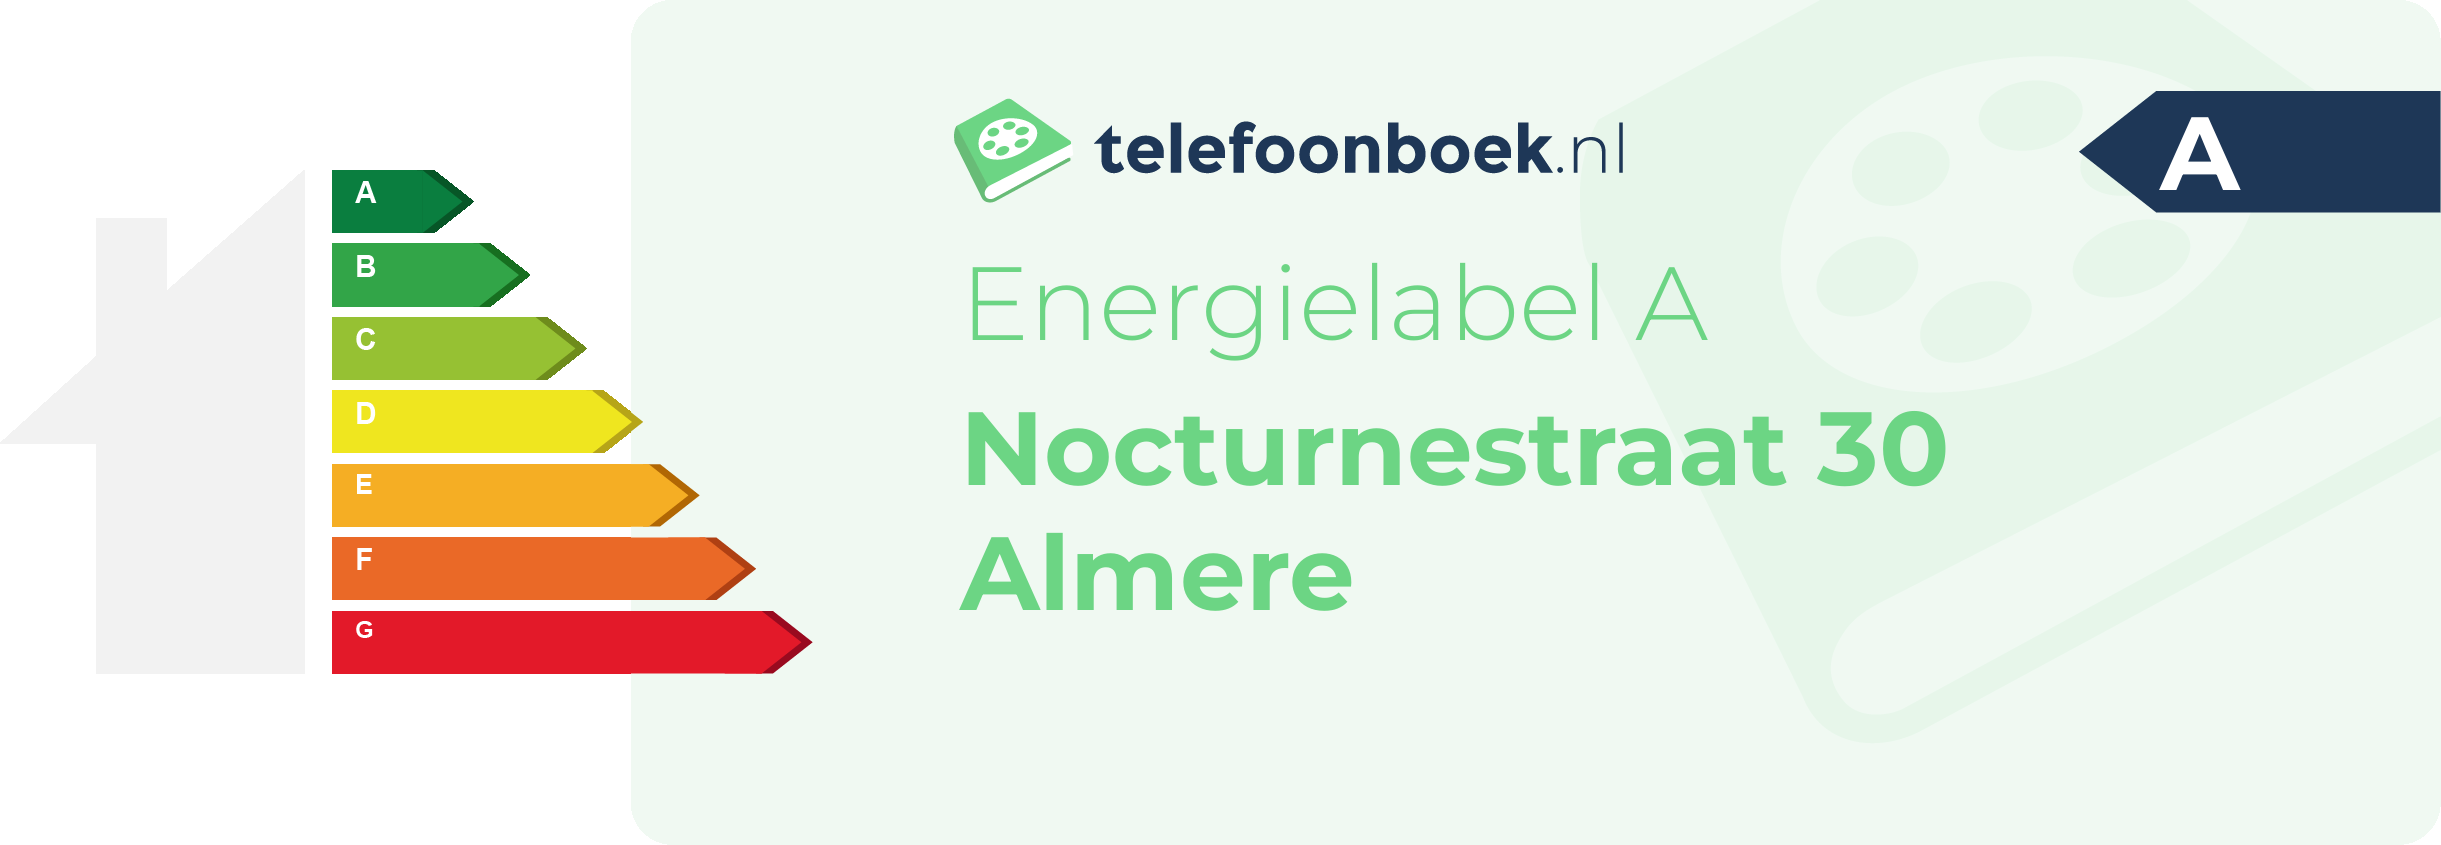 Energielabel Nocturnestraat 30 Almere